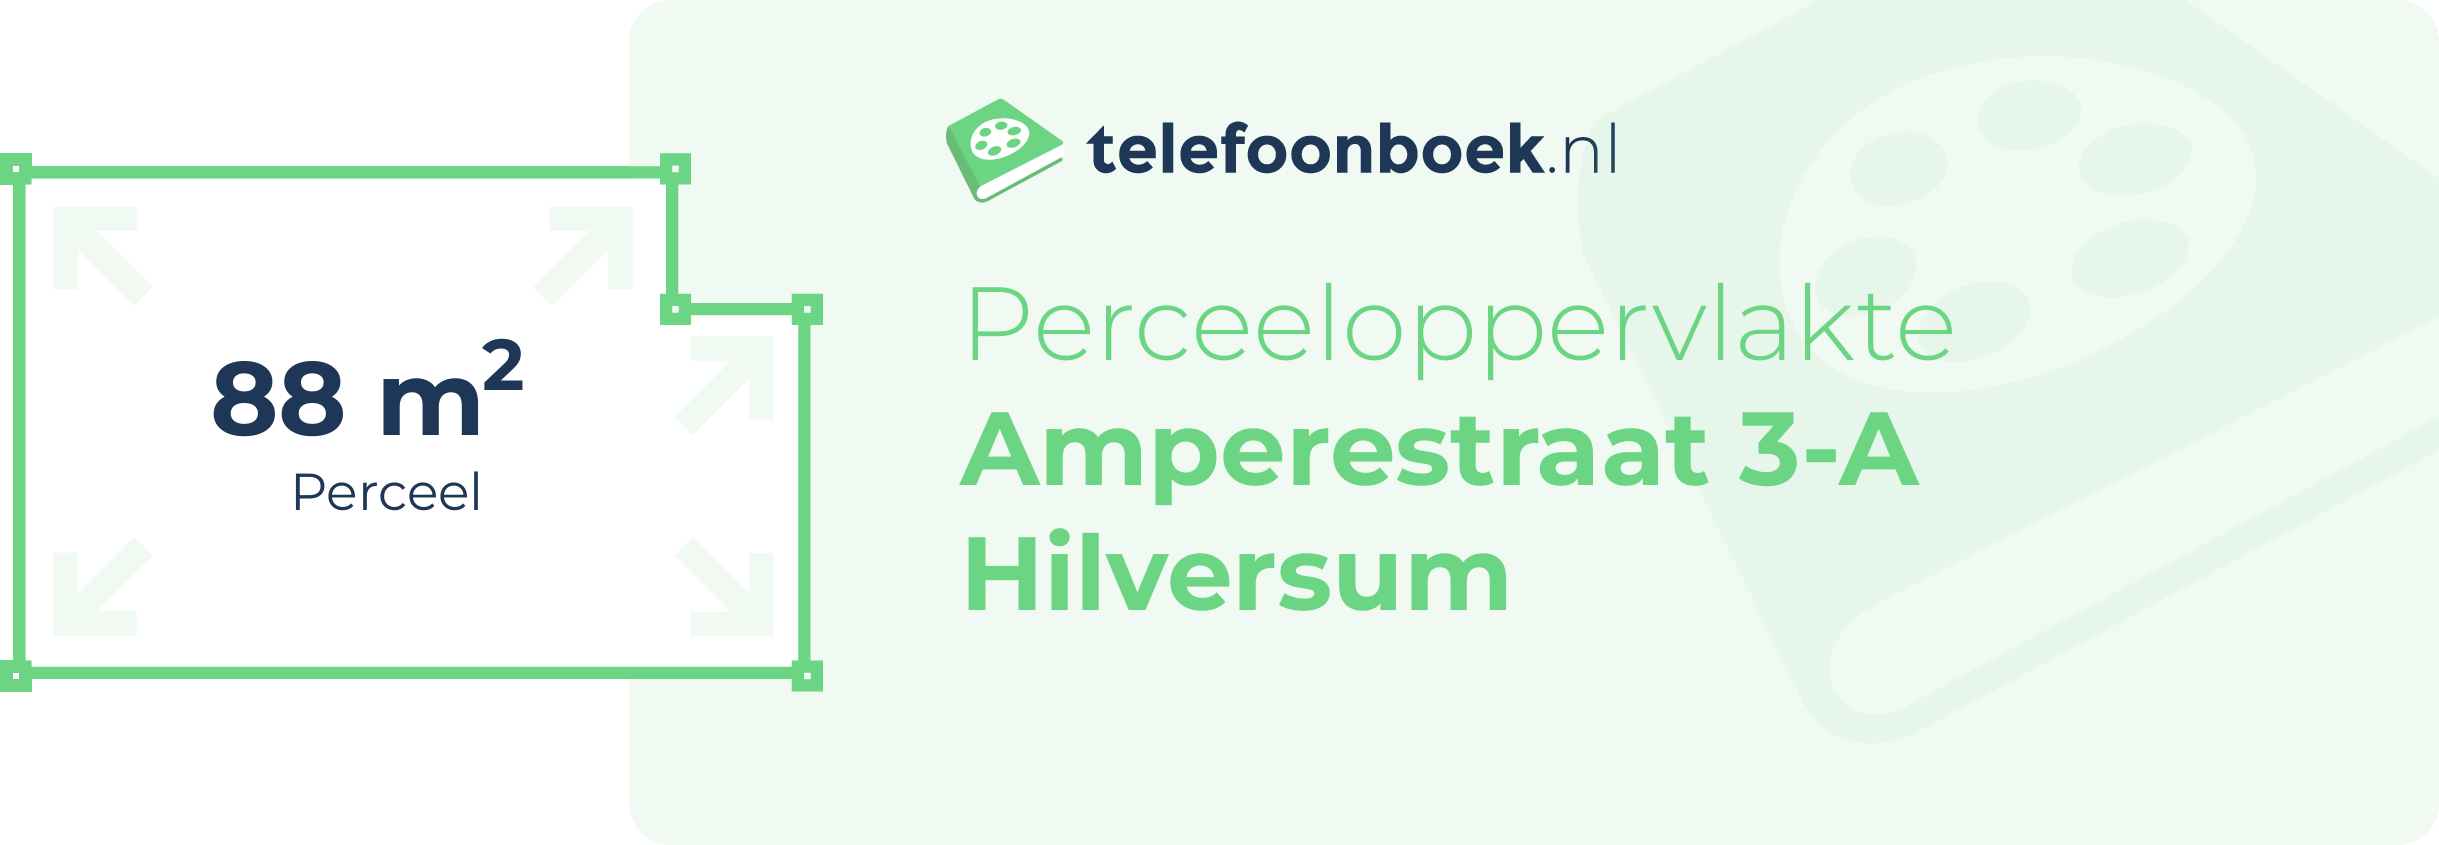 Perceeloppervlakte Amperestraat 3-A Hilversum